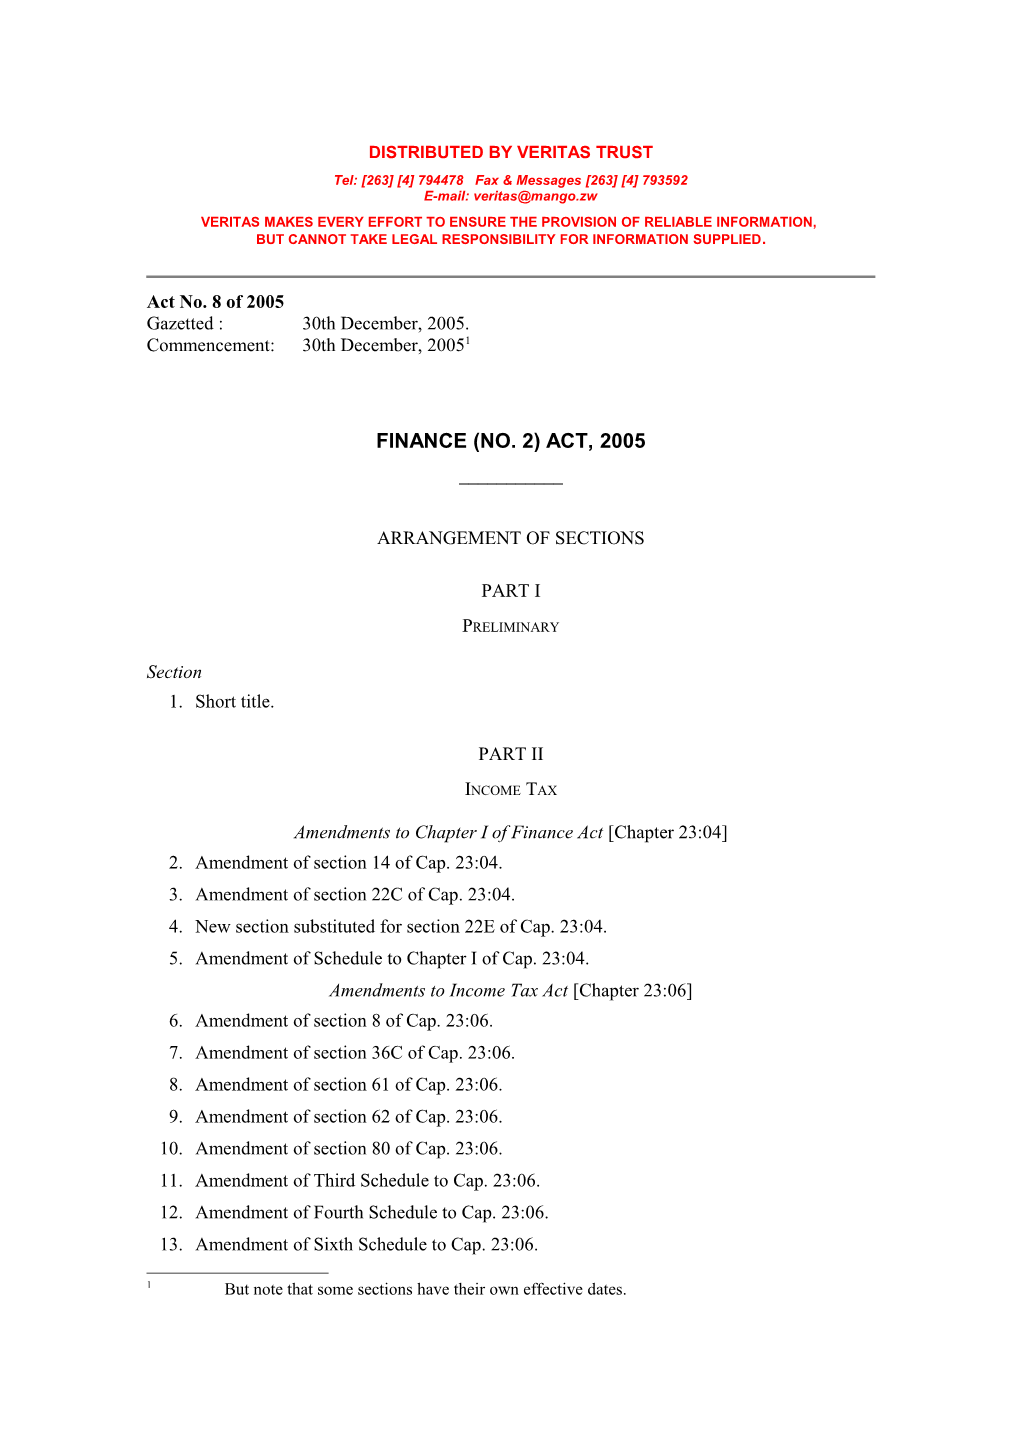 Finance (No. 2) Act, 2005 (No. 8 of 2005)